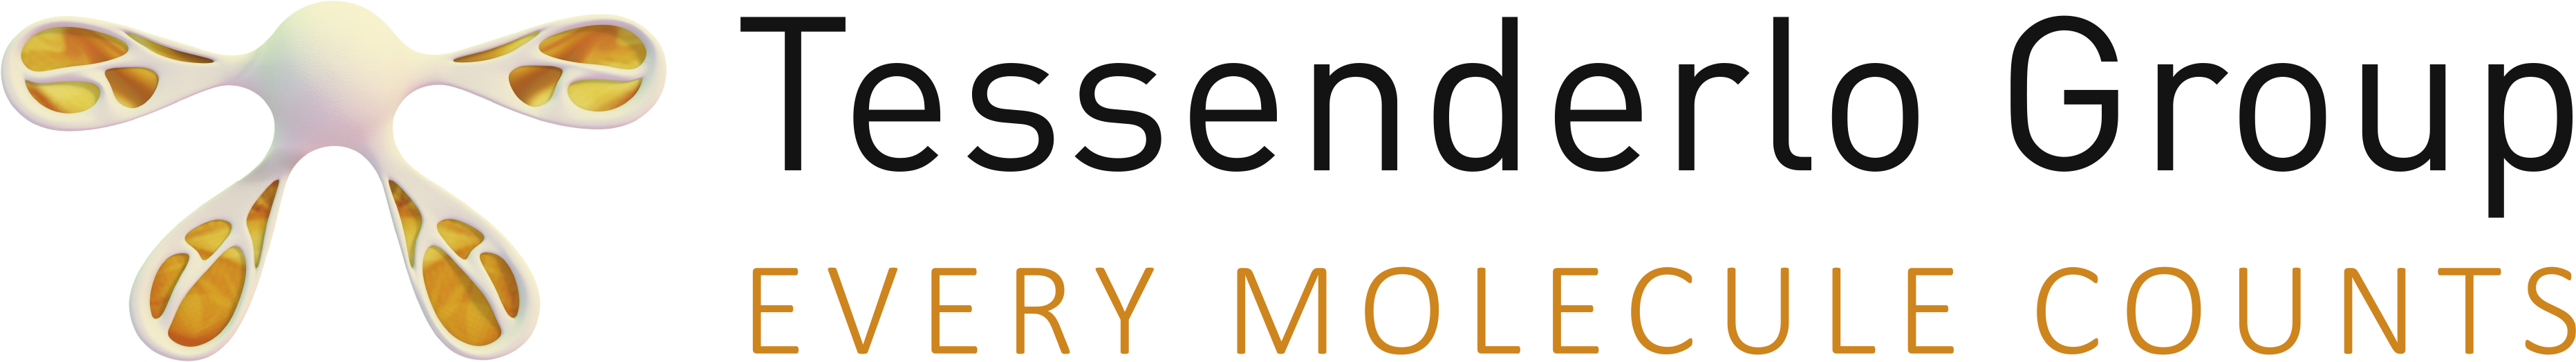 Tessenderlo Group logo large (transparent PNG)